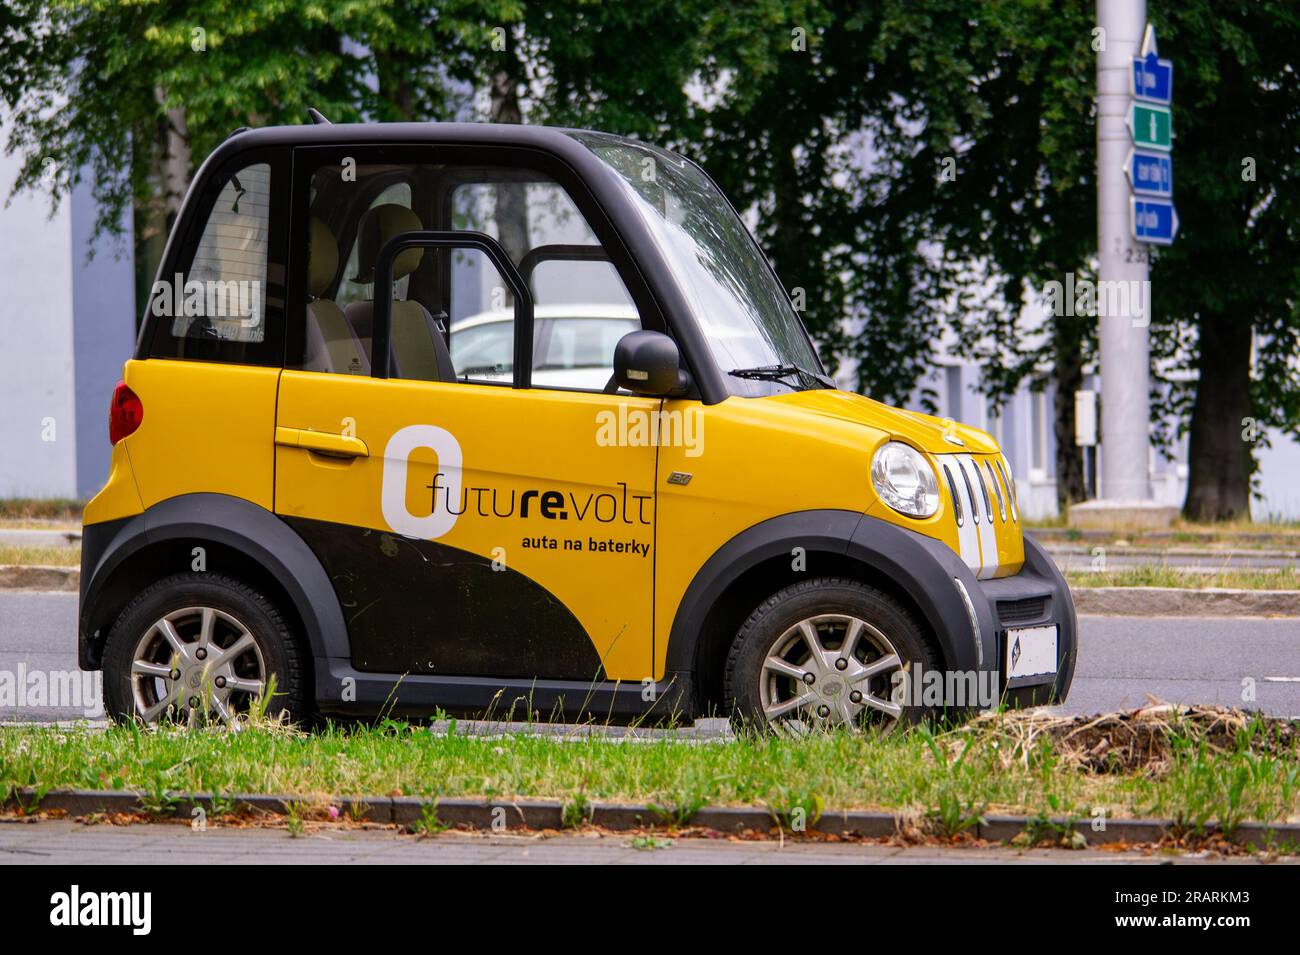 OSTRAVA, CZECH REPUBLIC - JUNE 21, 2023: Jiayuan Lingzu electric micro vehicle of Re-Volt (FutureVolt) car sharing company in Czech Republic Stock Photo